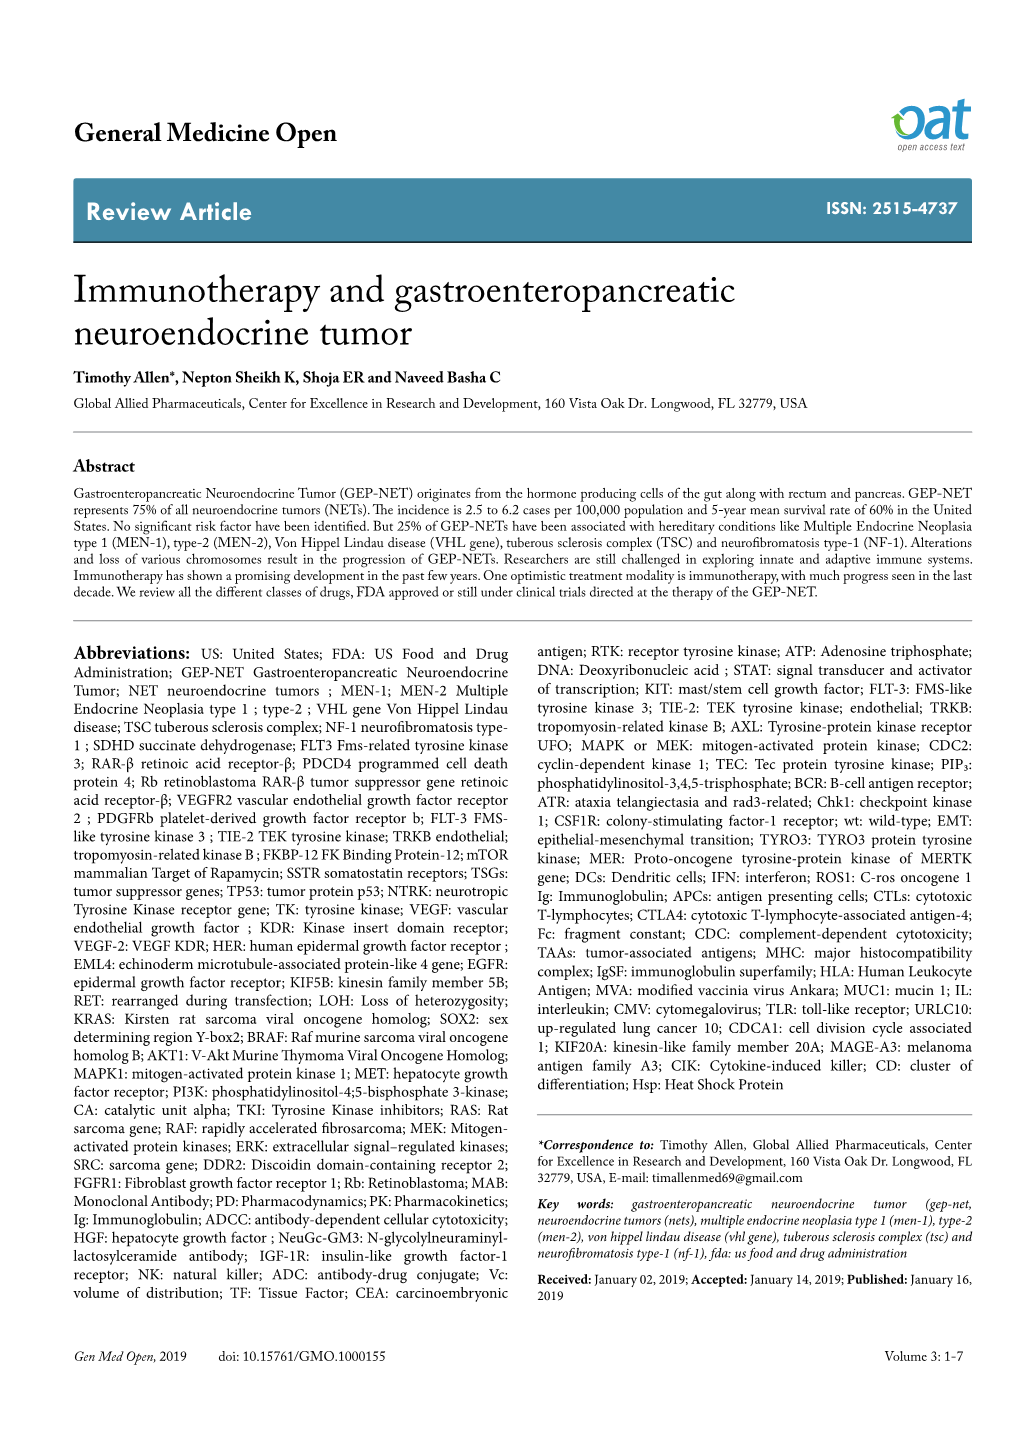 Immunotherapy and Gastroenteropancreatic Neuroendocrine Tumor